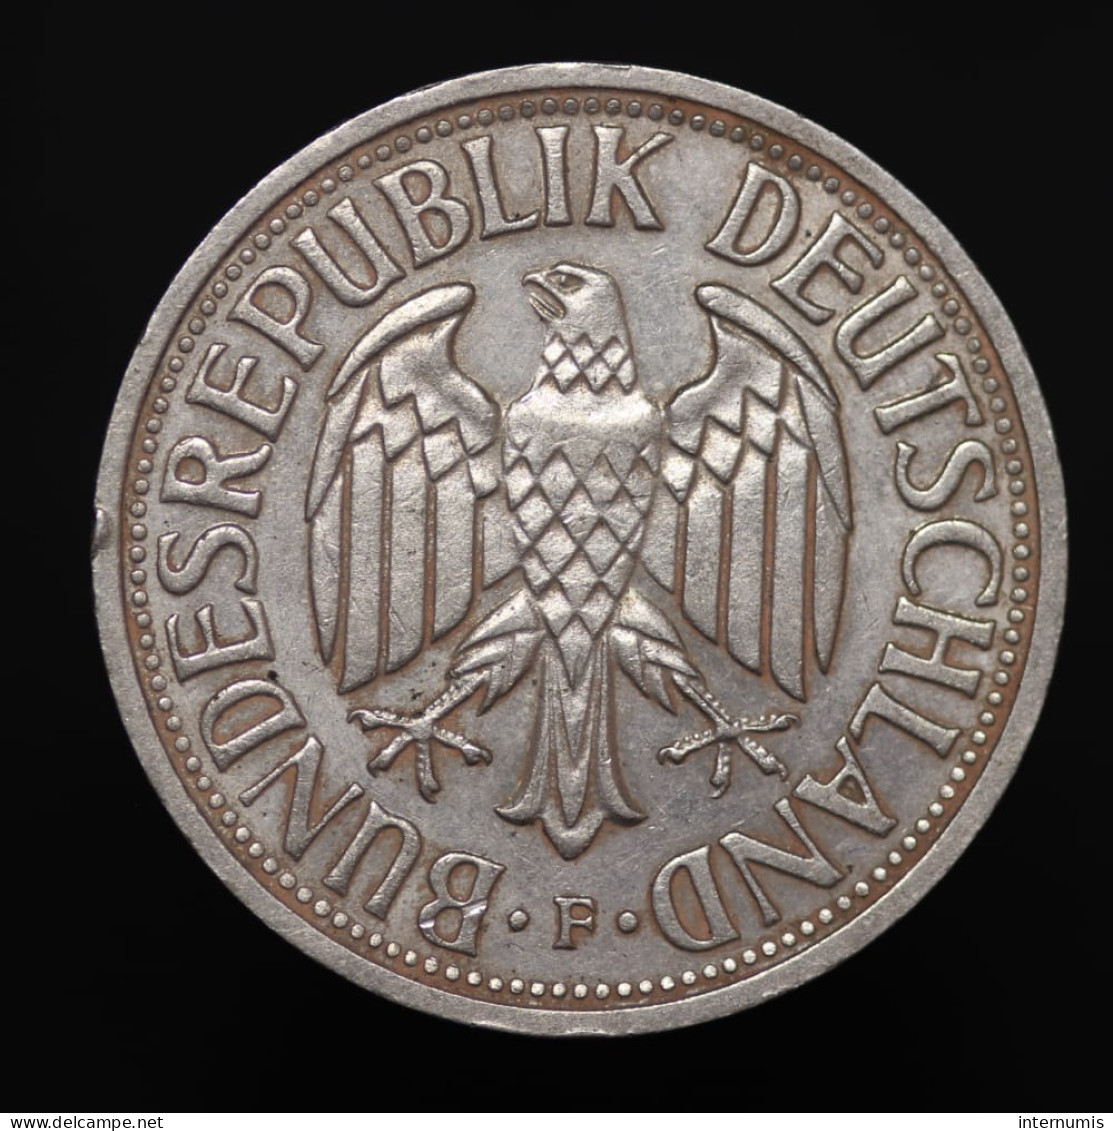 Allemagne / Germany, 2 Mark, 1951 - F, Stuttgart, Cu-N (Copper-Nickel), SUP (AU), KM#111 - 2 Mark